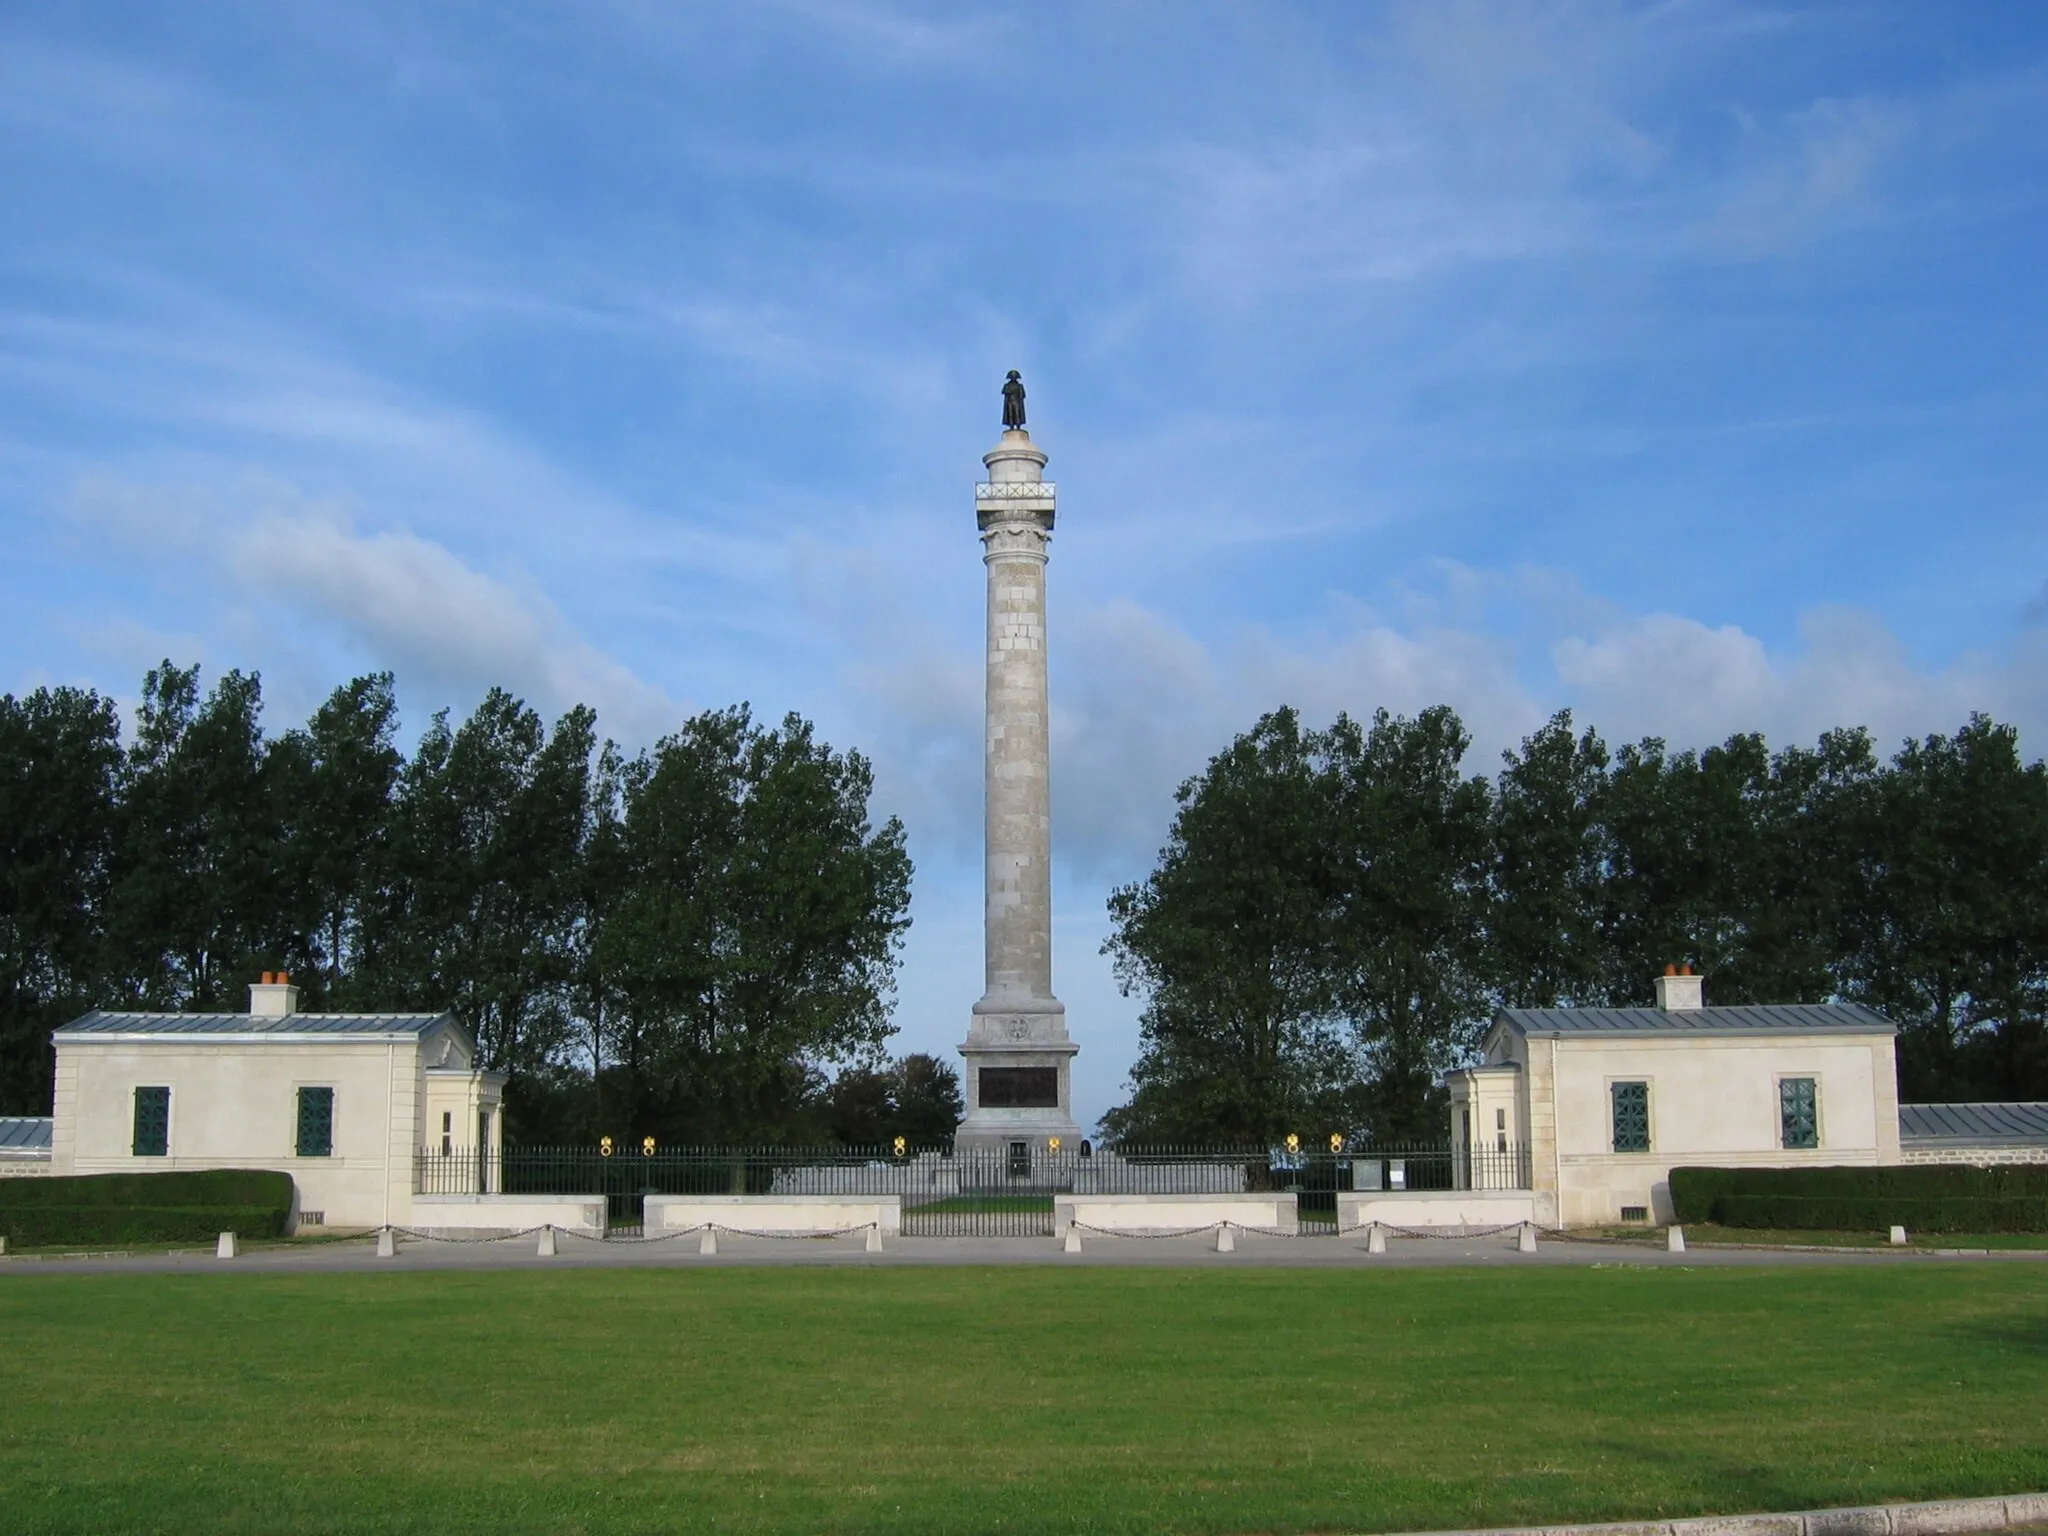 Photo showing: Commemorative column, memorialising Napoléon and the Grande Armée, at Wimille, near Boulogne-sur-mer, France.